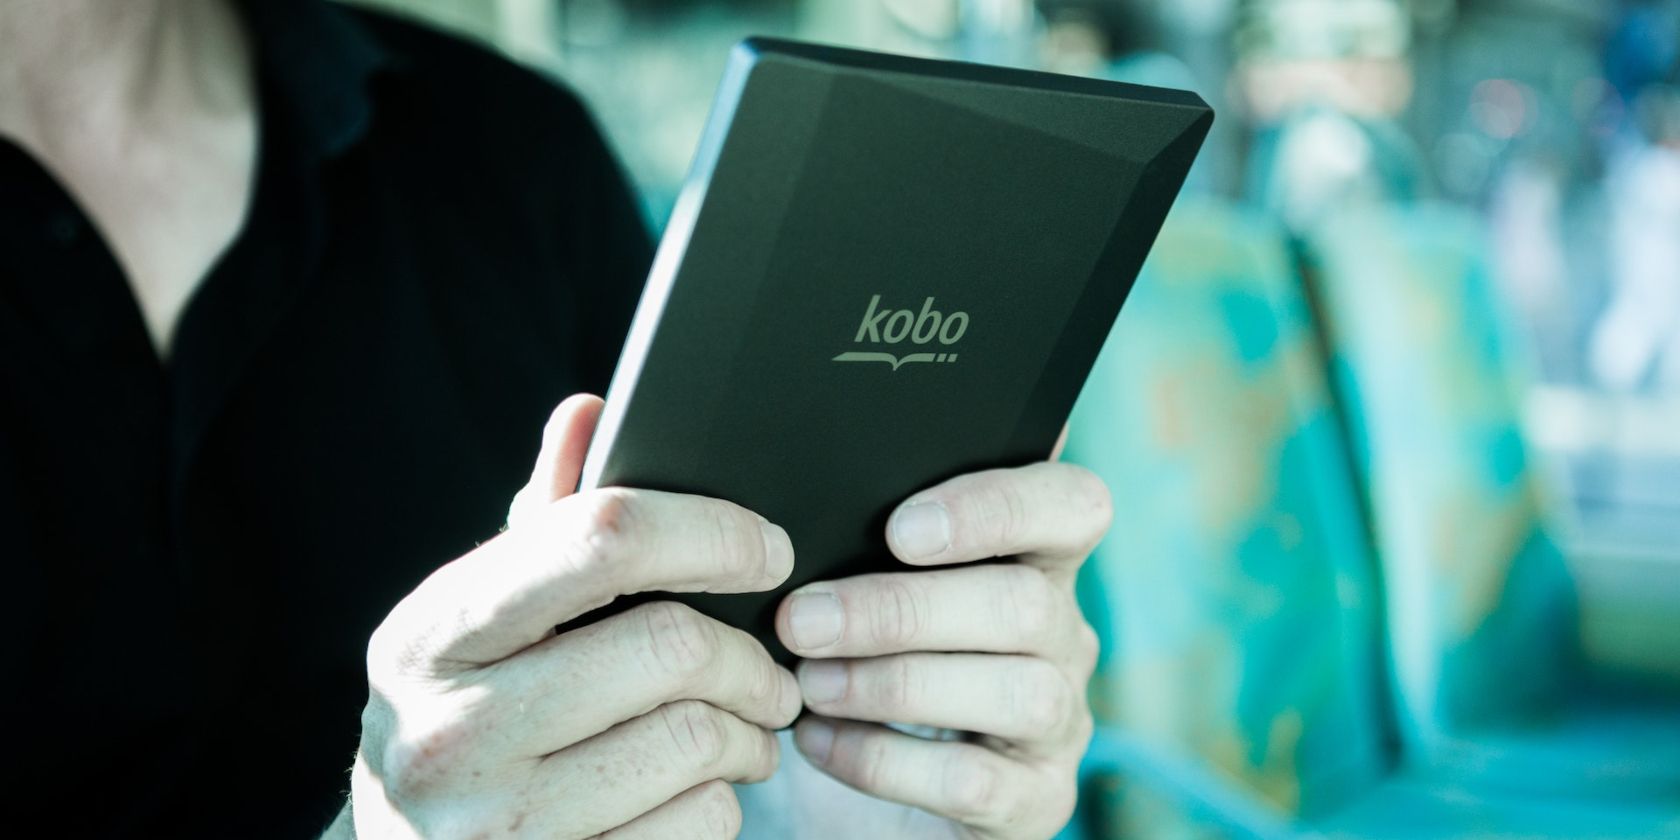 Ebook Reader Using Kobo Device